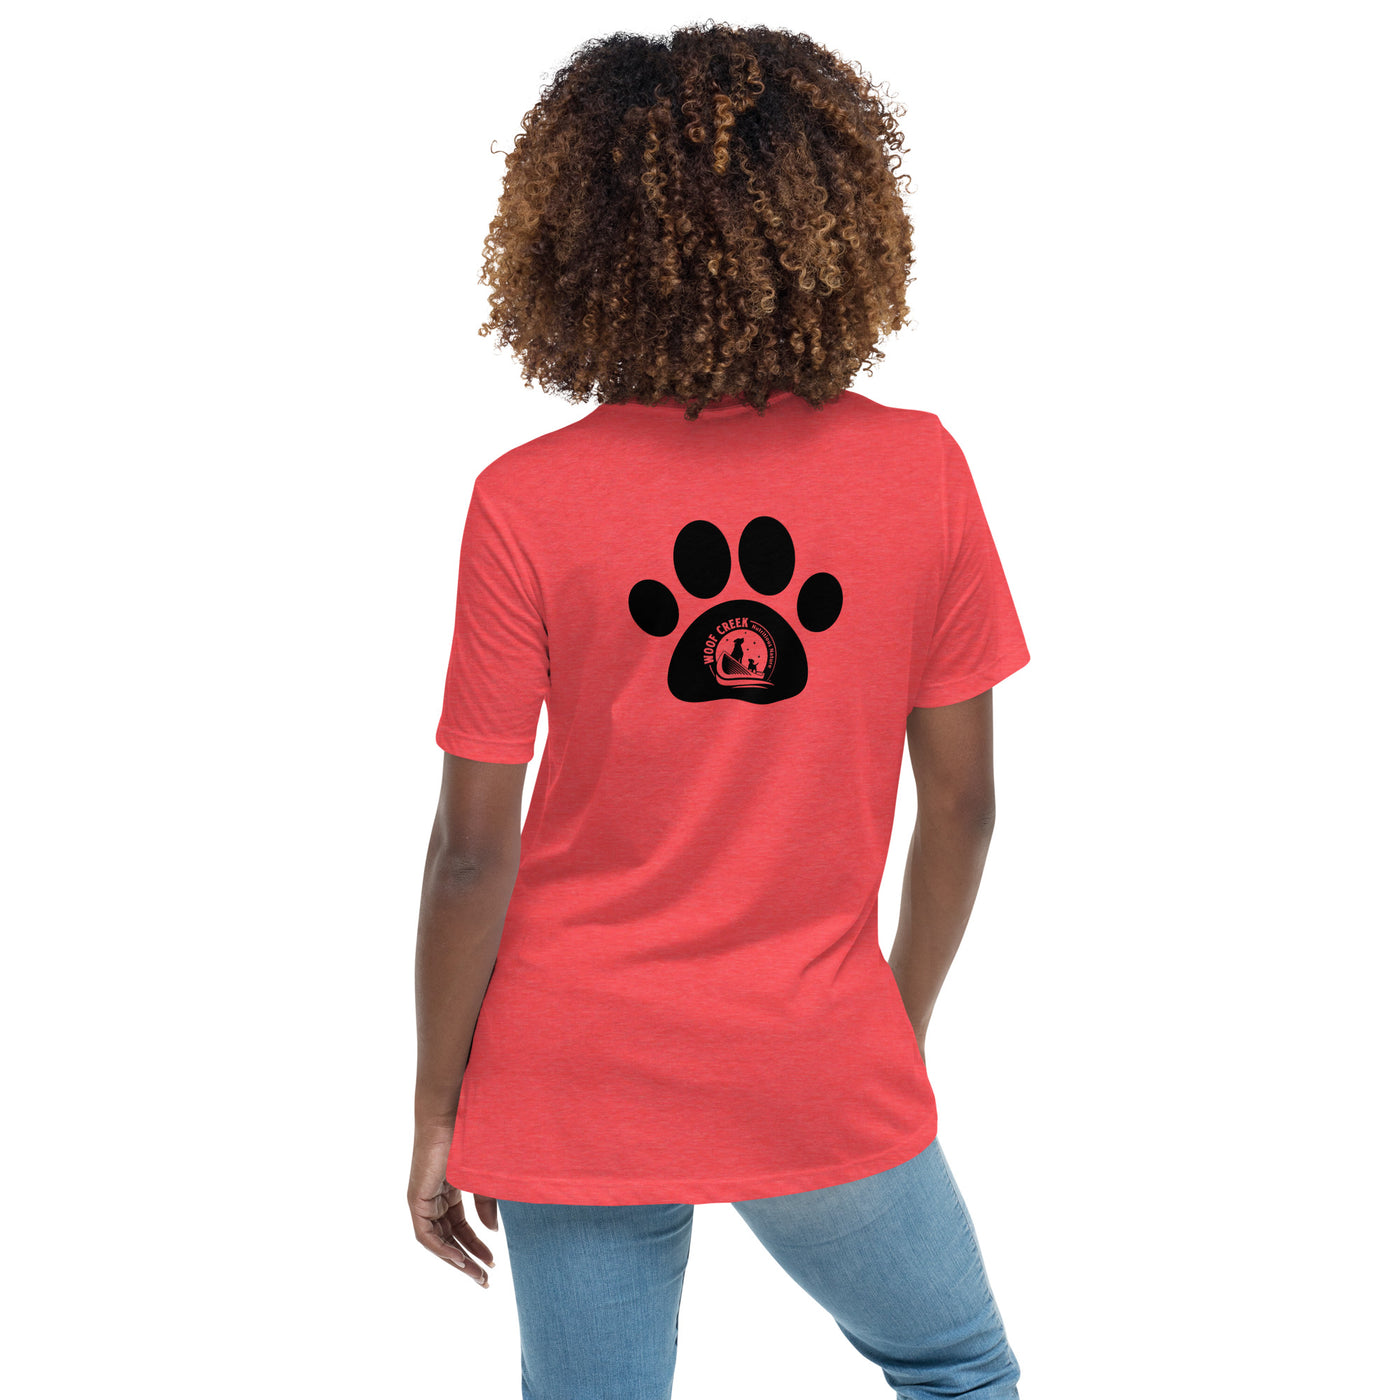 Women's Relaxed T-Shirt | "Dogs > People" - Woof Creek Dog Wellness